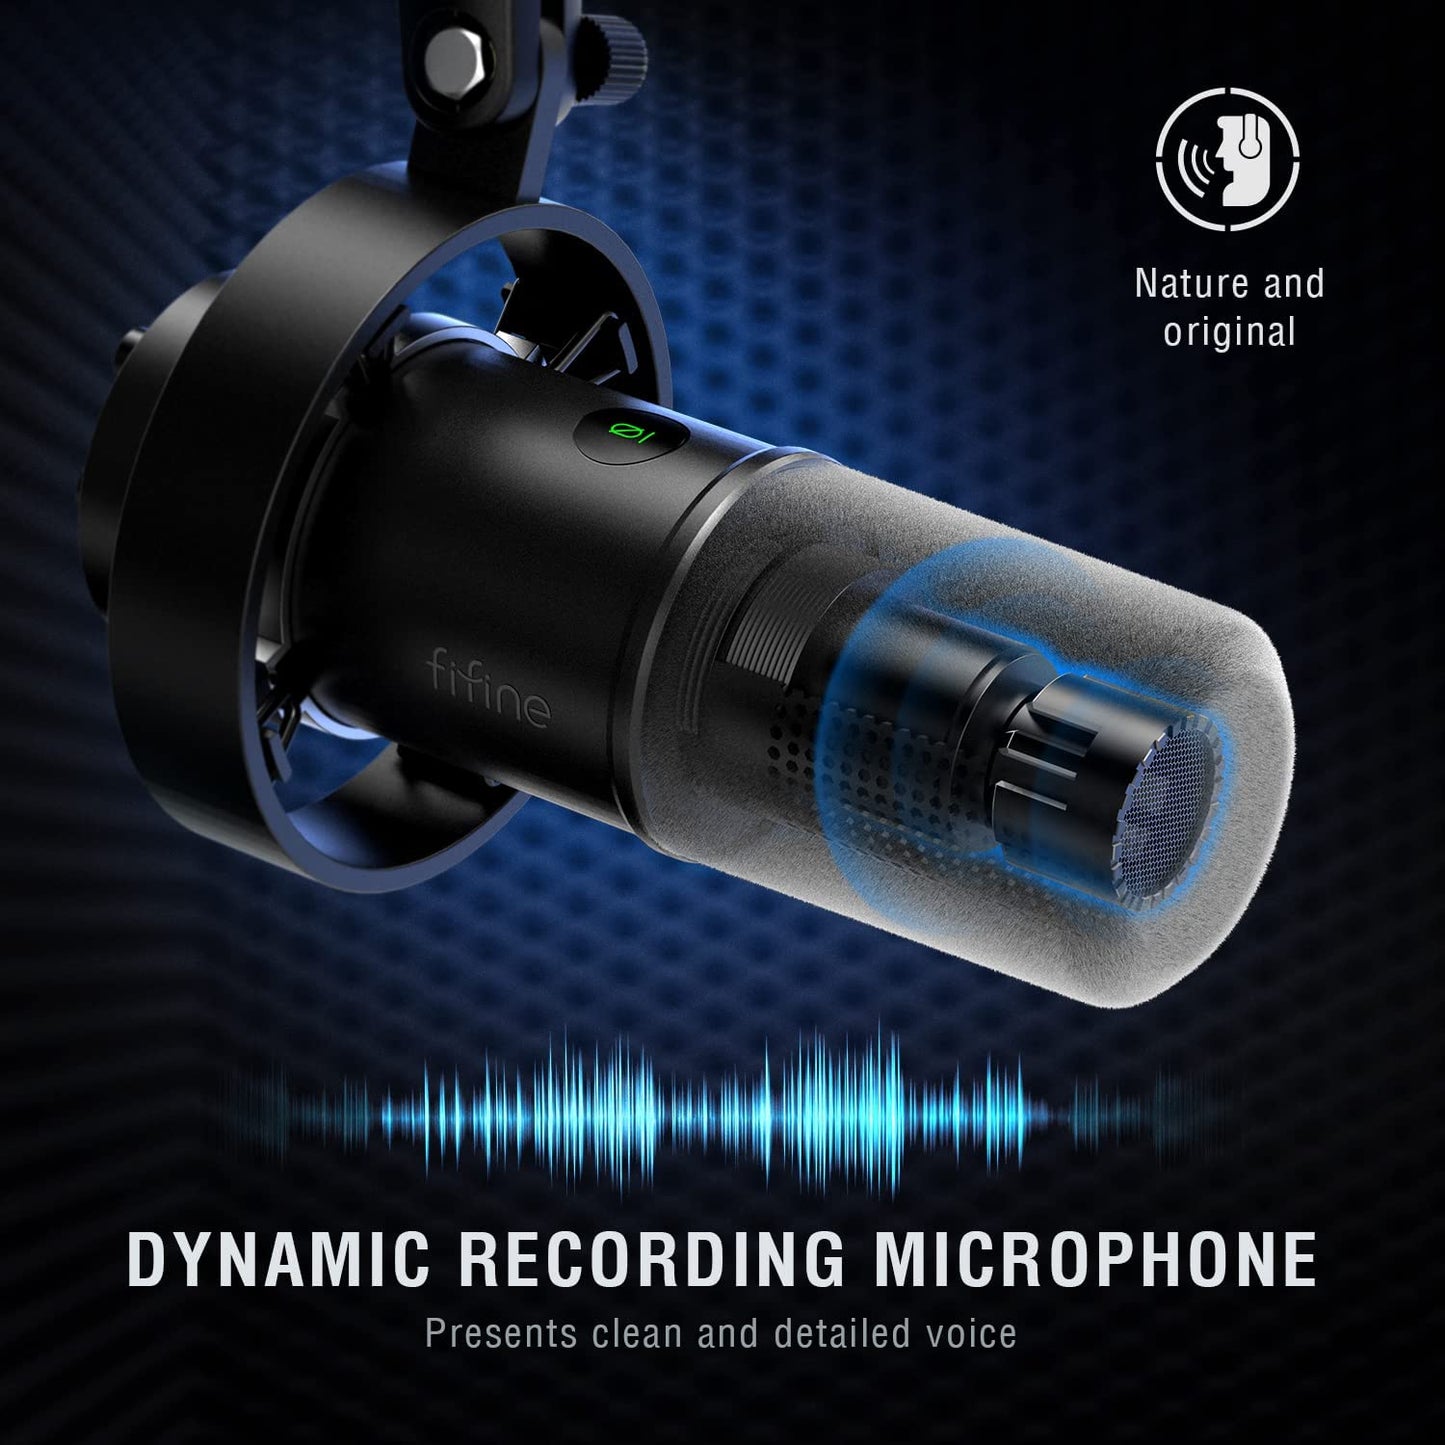 FIFINE Amplitank K688 - USB/XLR Dynamic Microphone for Podcasting